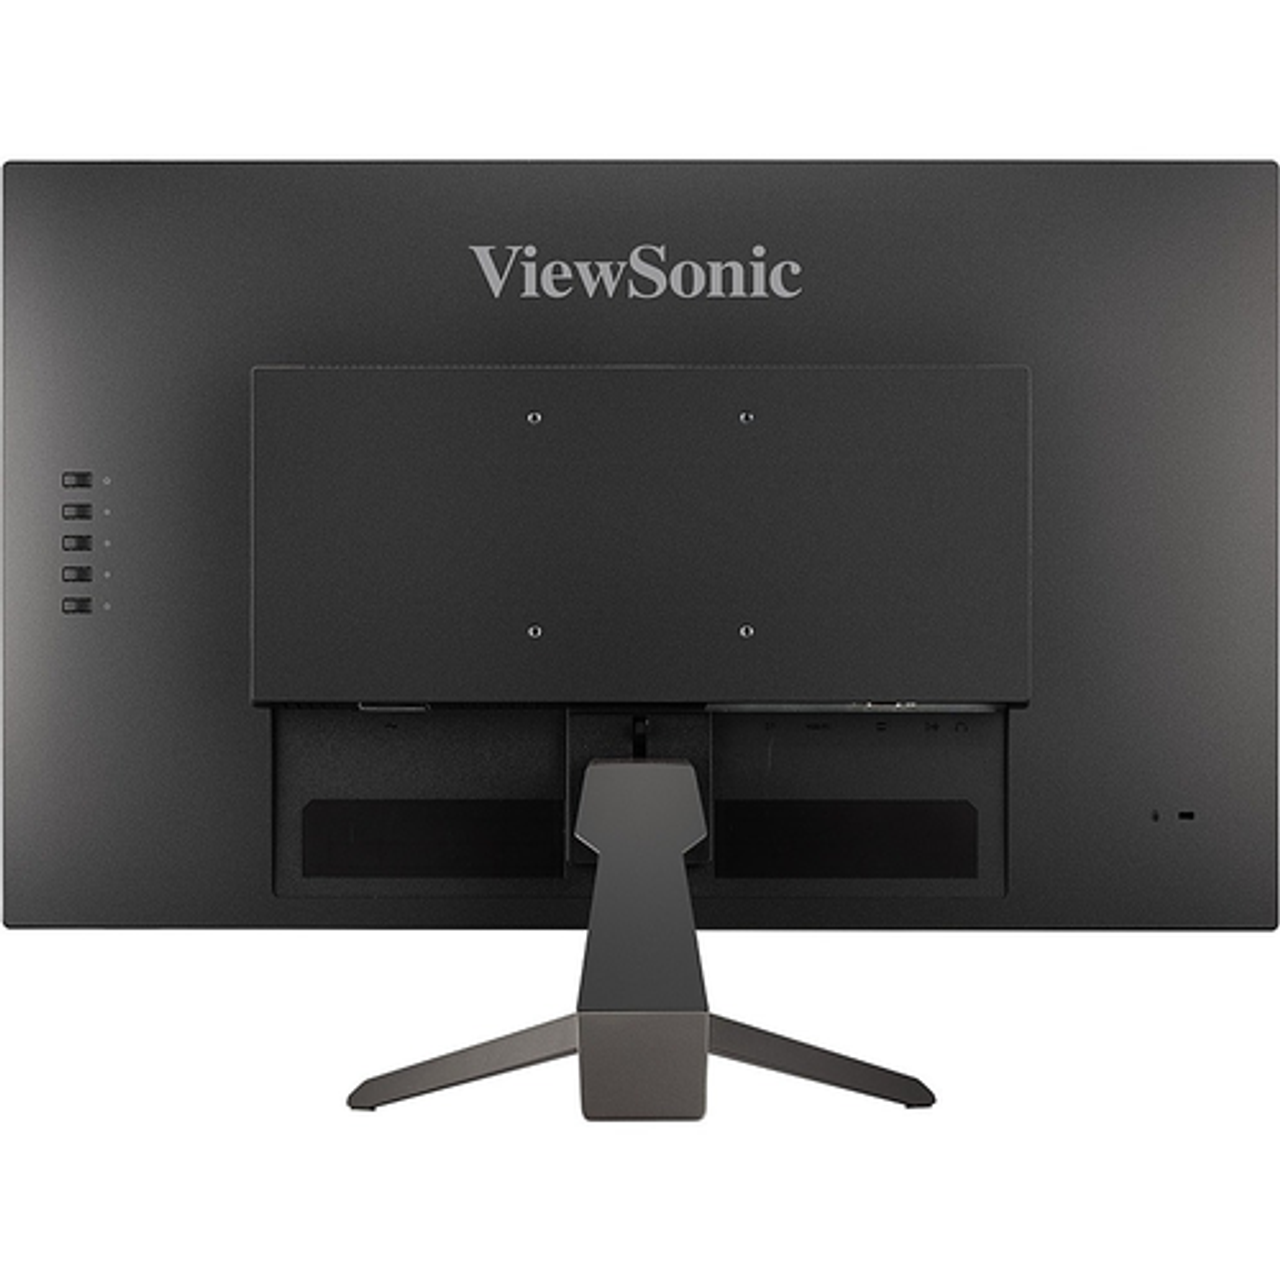 ViewSonic - 21.5 LCD FHD Monitor (DisplayPort VGA, HDMI) - Black